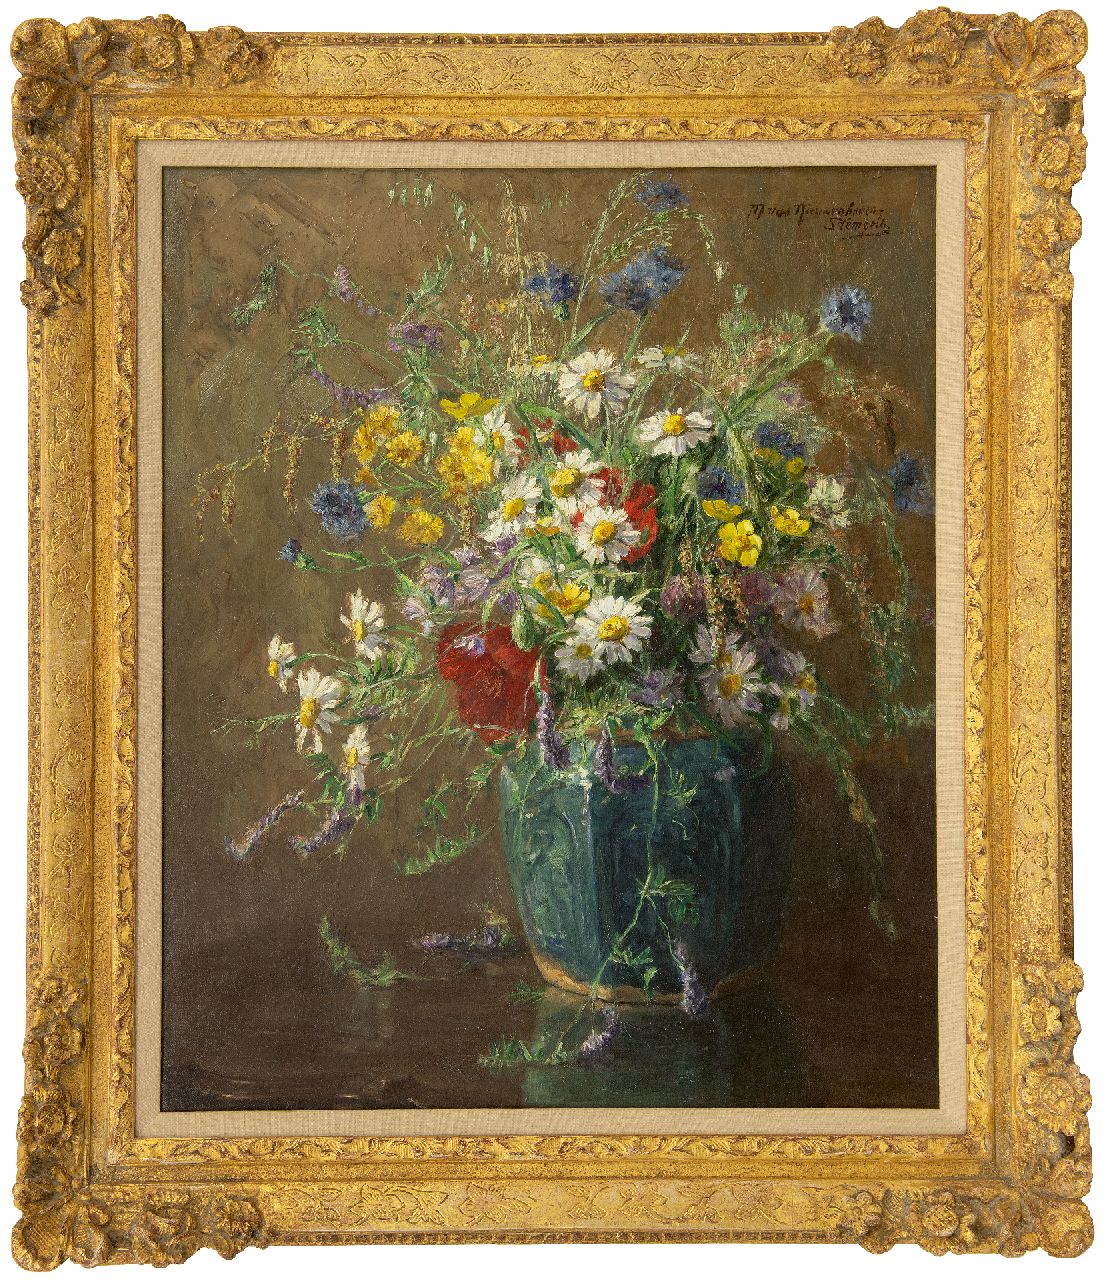 Nieuwenhoven-Stempels J.C.M. van | Johanna Catharina 'Maria' van Nieuwenhoven-Stempels, A flower still life, oil on canvas 56.0 x 46.0 cm, signed u.r.